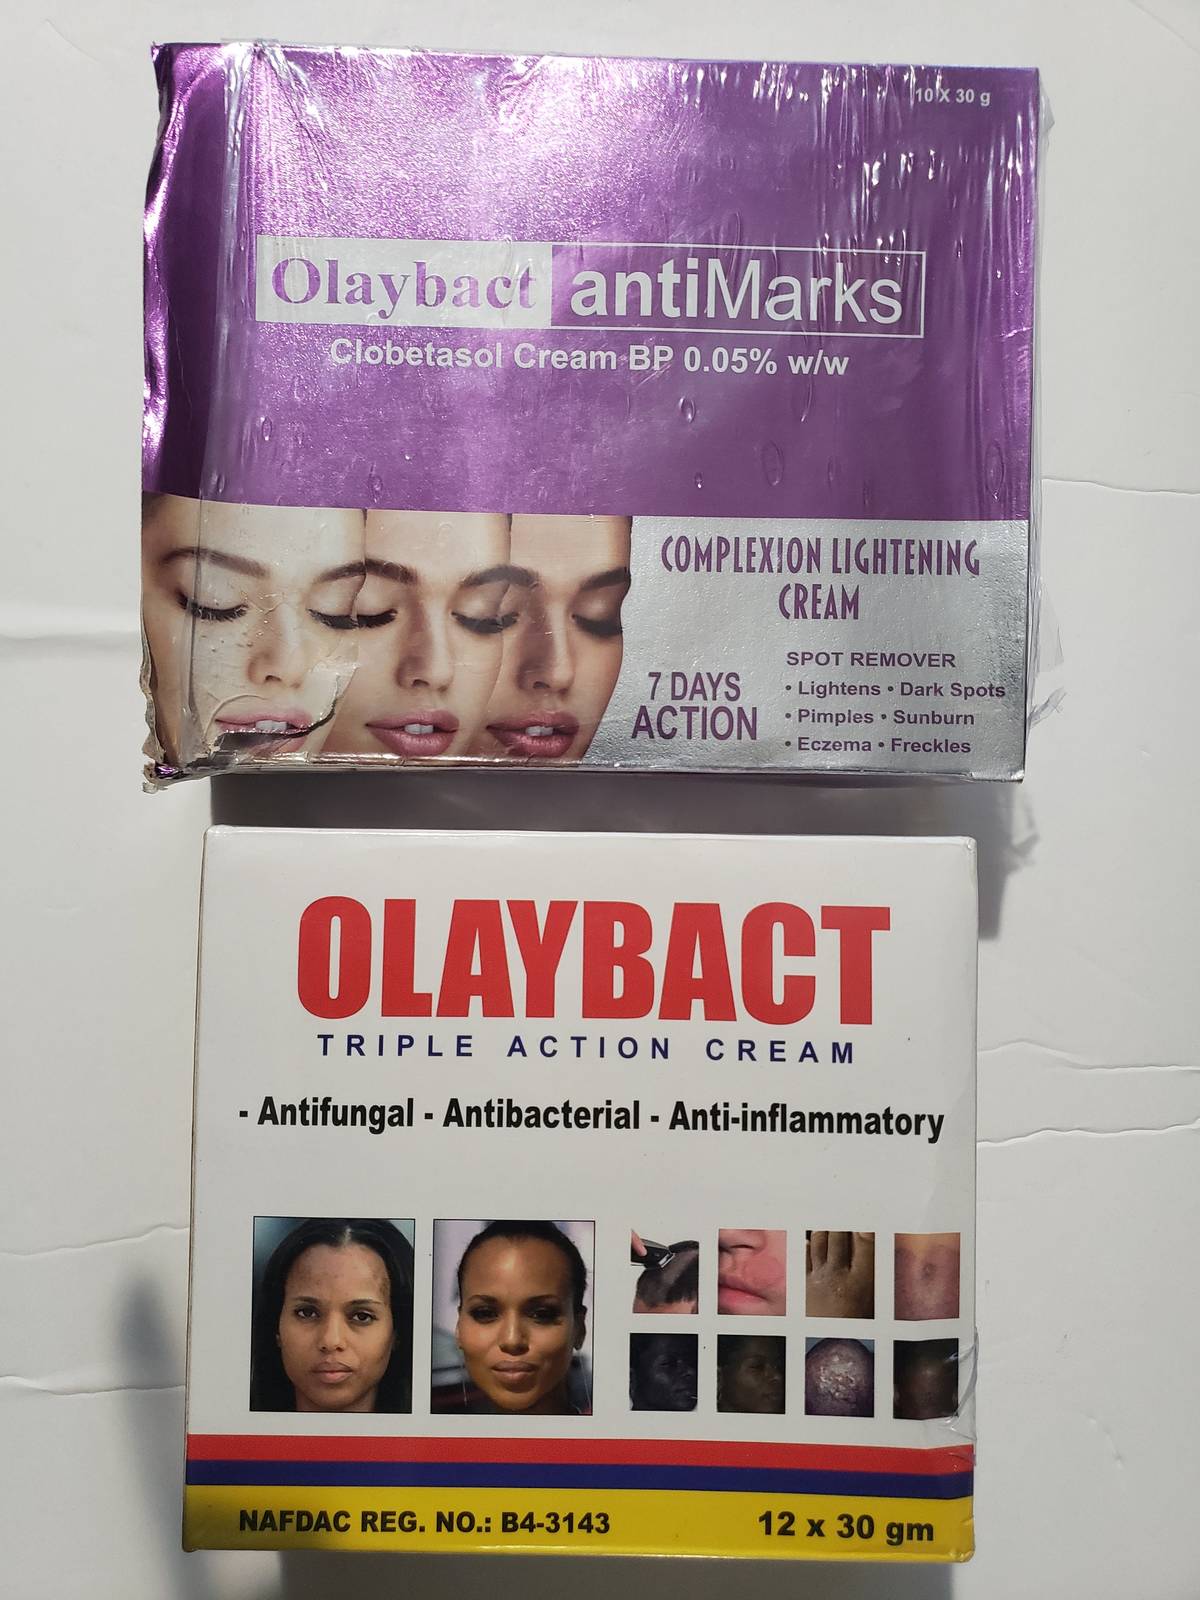 Olaybact tripple action cream×10 and Olaybact anti marks x10